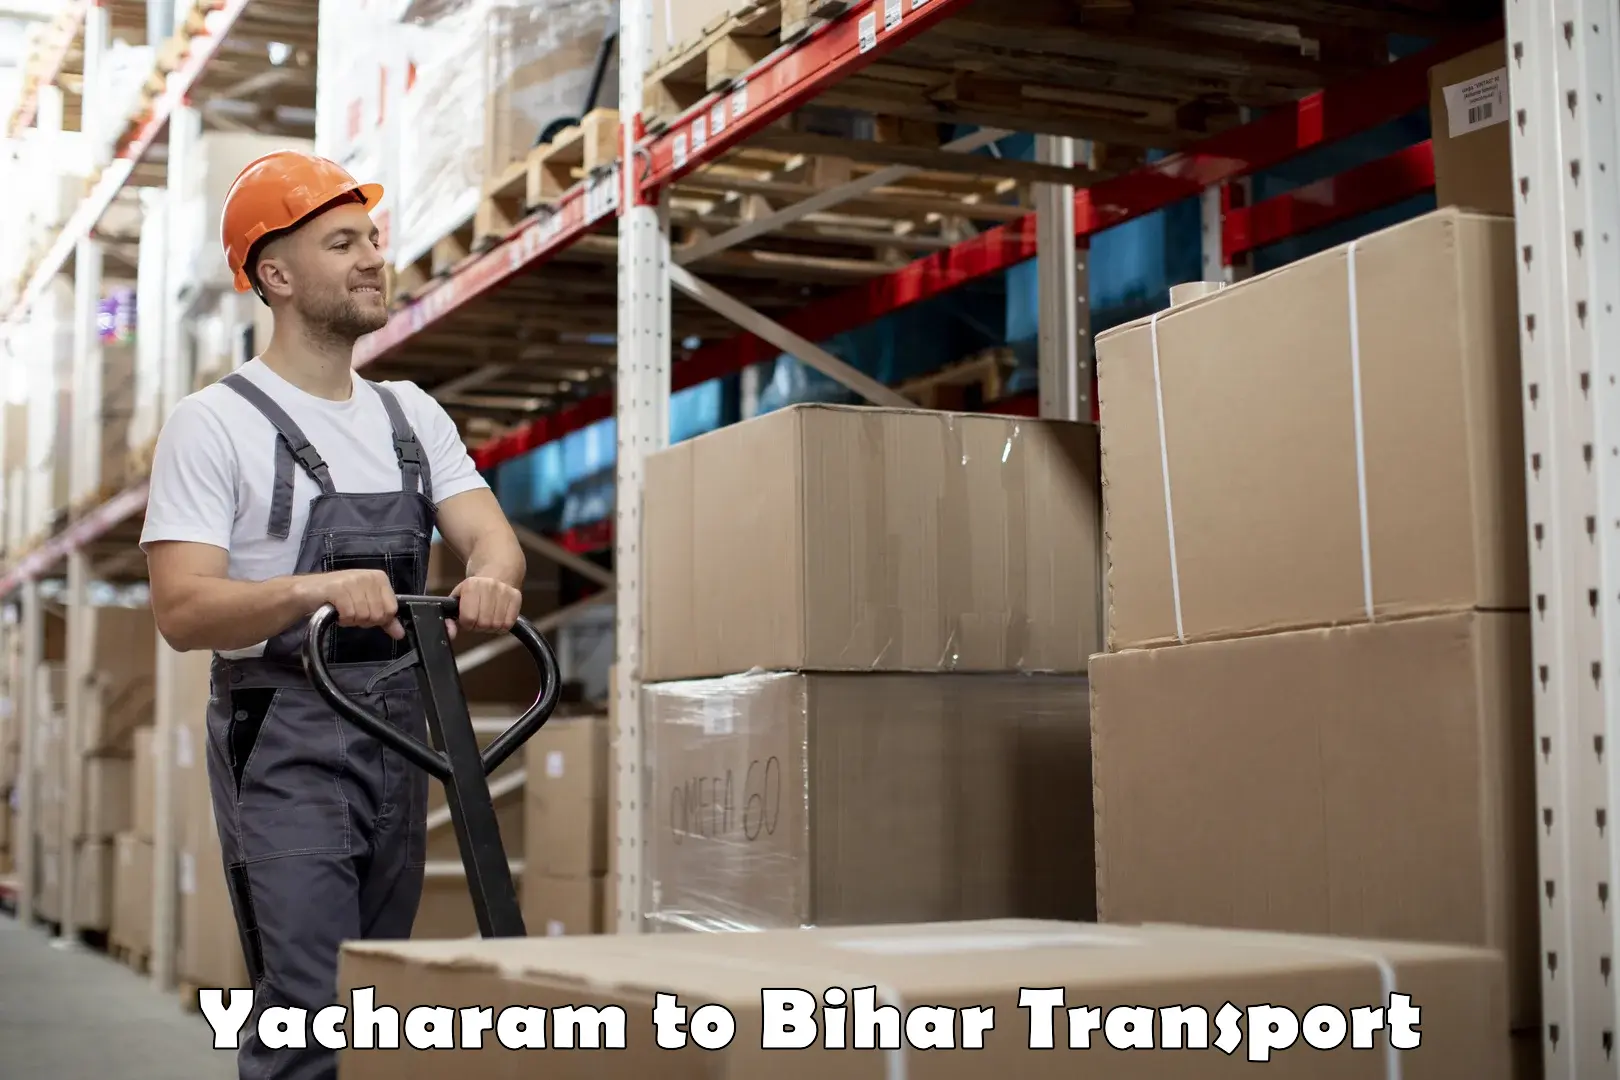 Lorry transport service Yacharam to Bihar